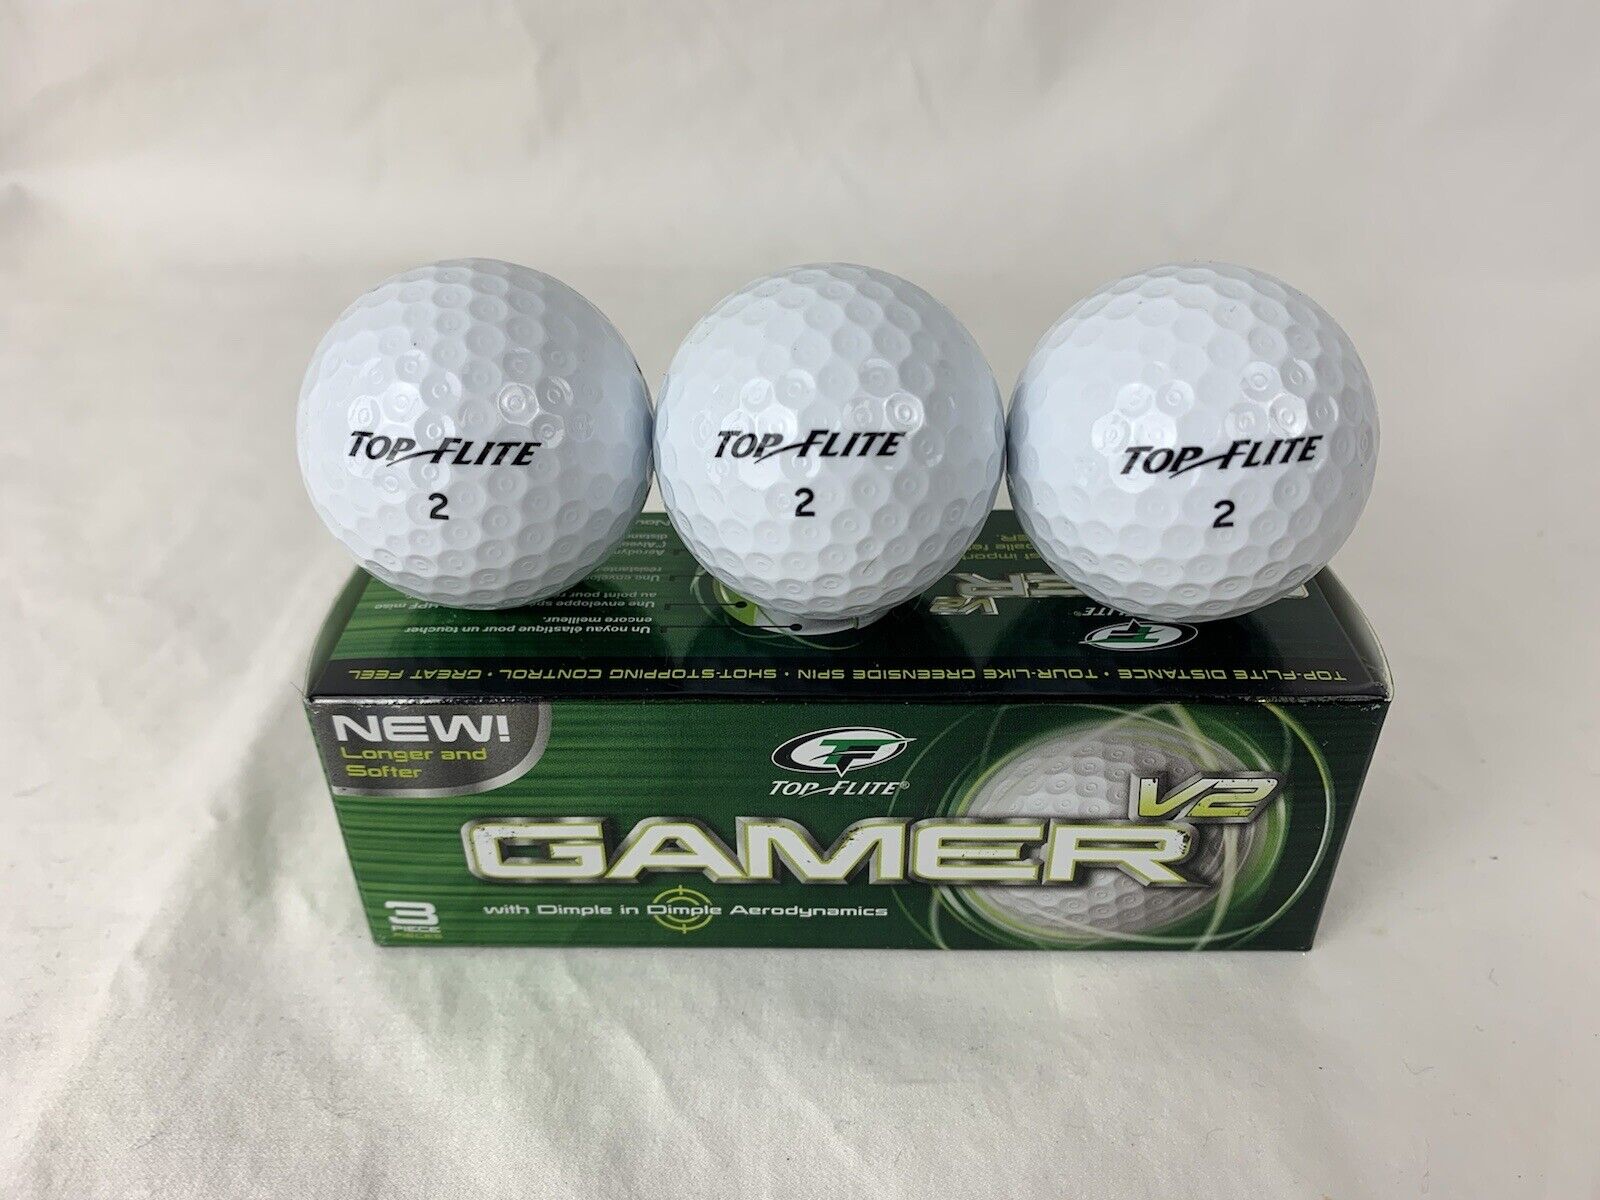 Top Flite Gamer V2 Golf Balls Box Of 3 / NO LOGOS Printed On These Balls BNIB￼￼